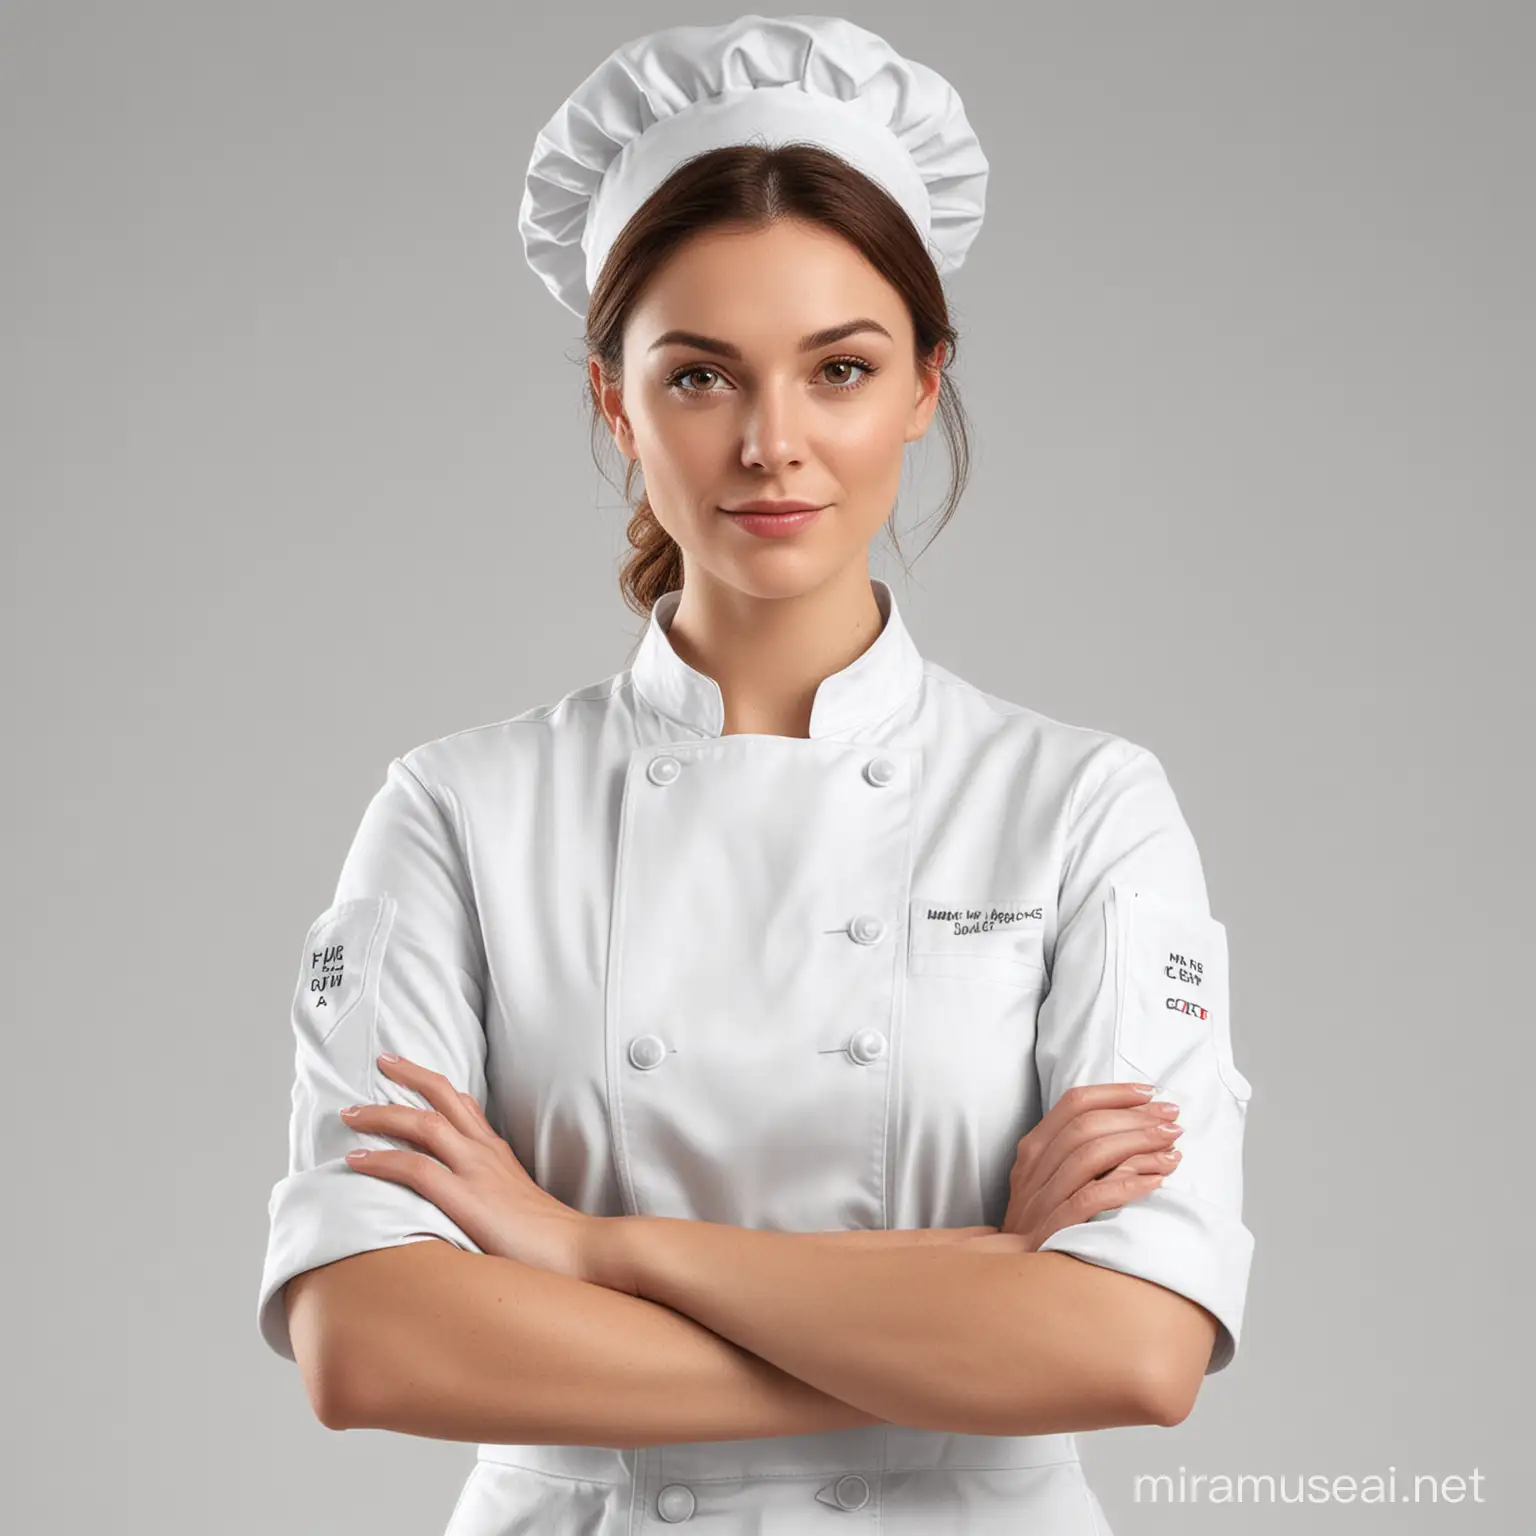 Professional Female Chef Portrait in Traditional Attire on White Background